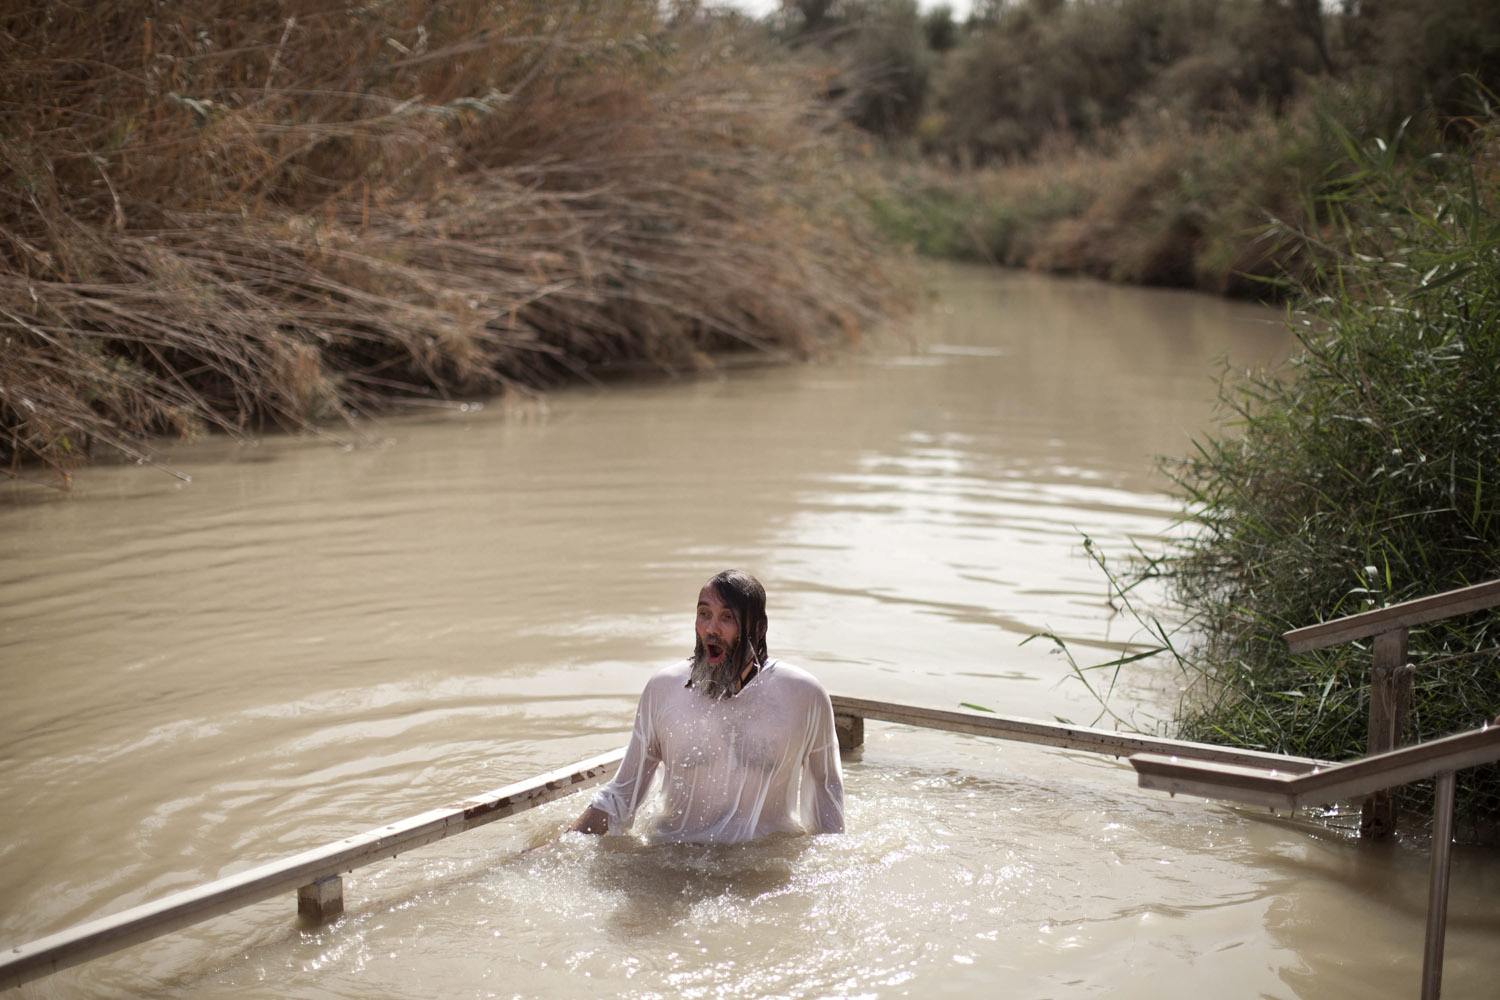 Orthodox pilgrims baptized in the Jordan River